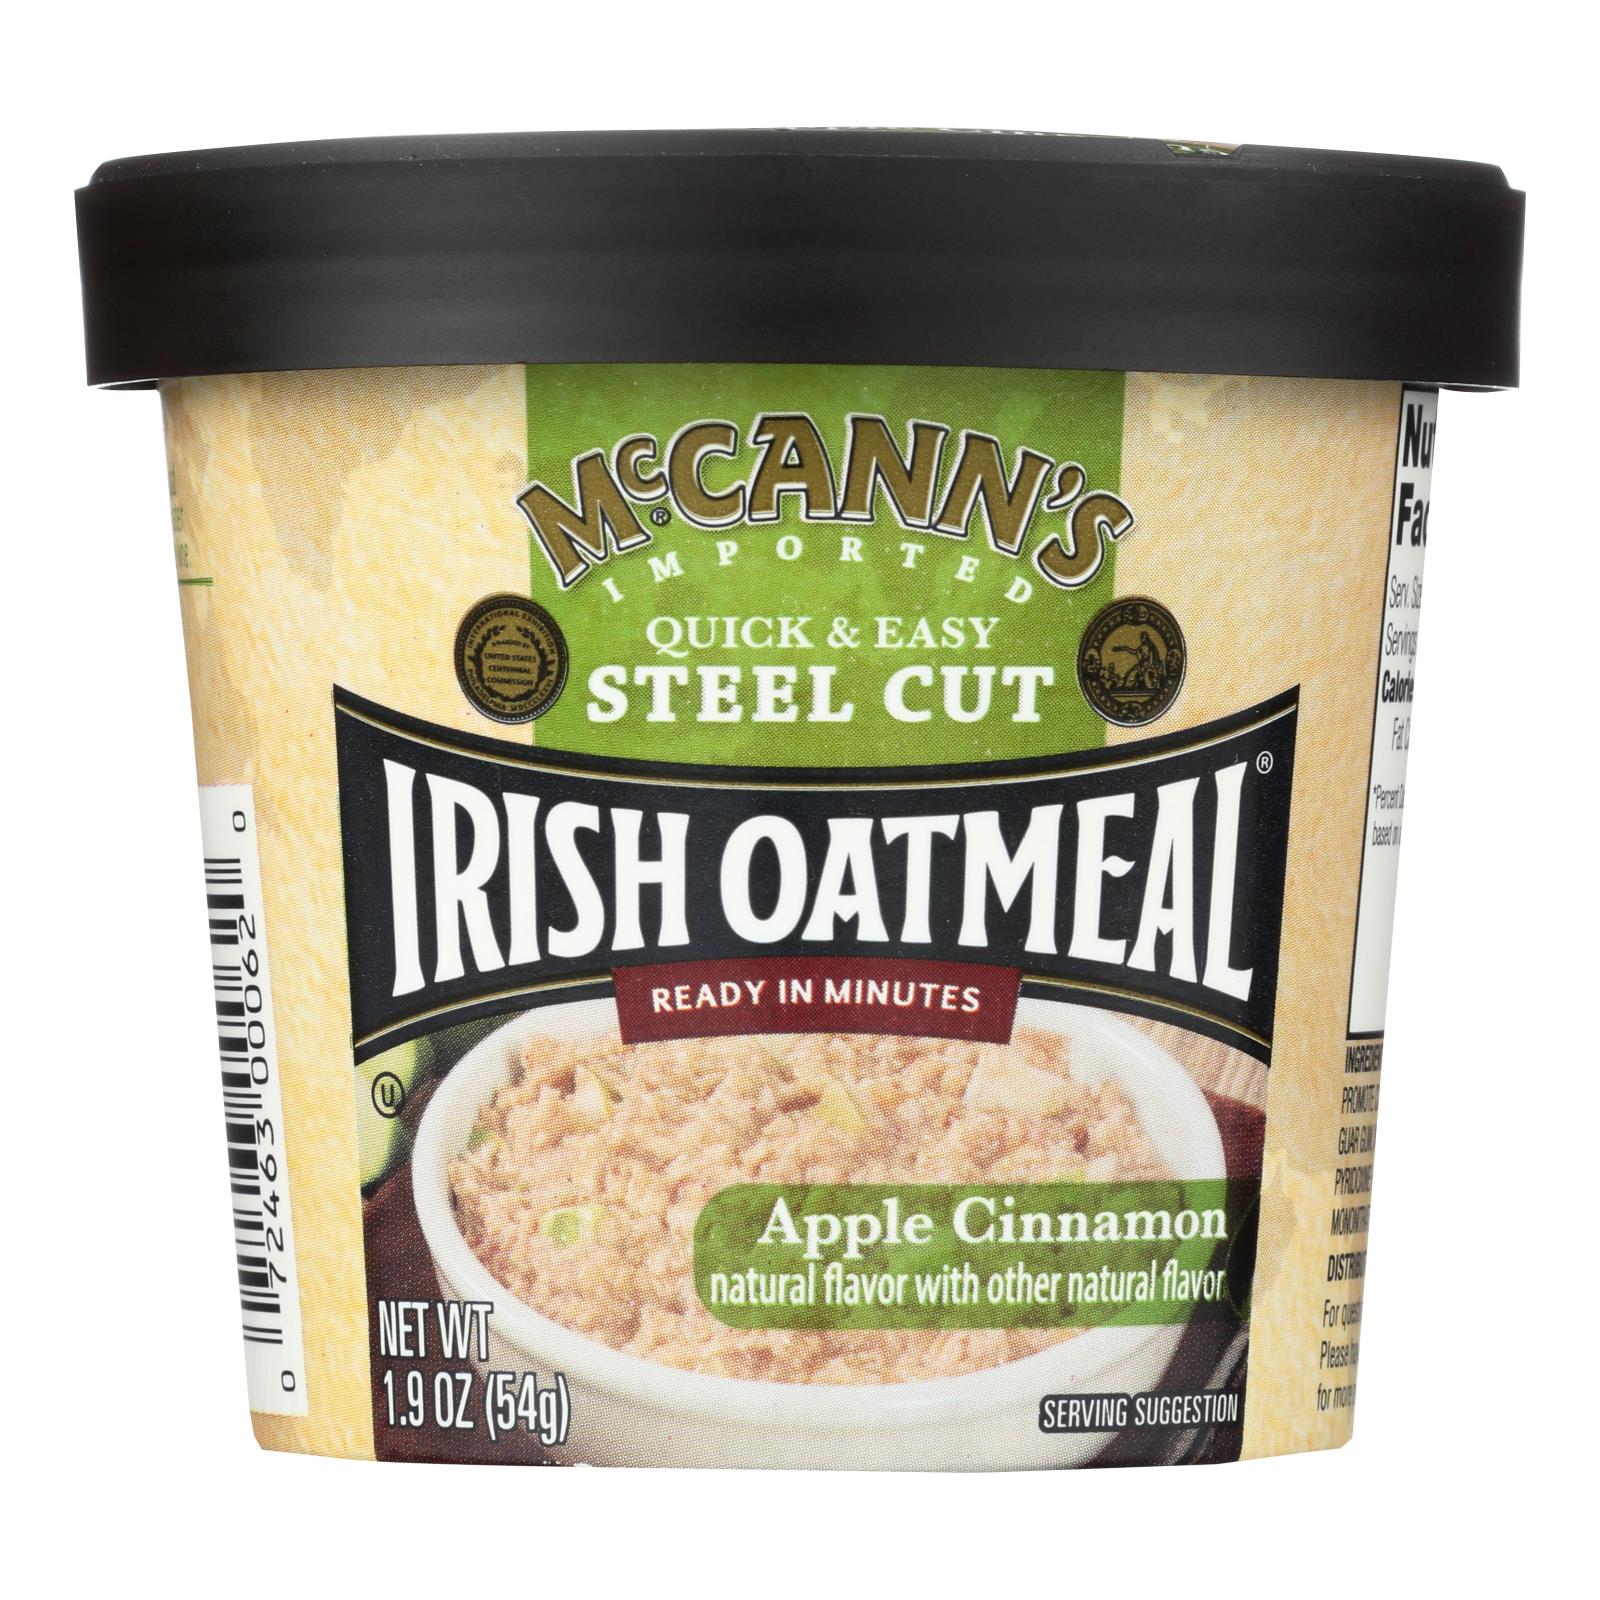 Mccann's Irish Oatmeal (farine d'avoine irlandaise), Mccann's Irish Oatmeal Instant Oatmeal Cup - Apple Cinnamon - Case of 12 - 1.9 oz (Pack of 12)